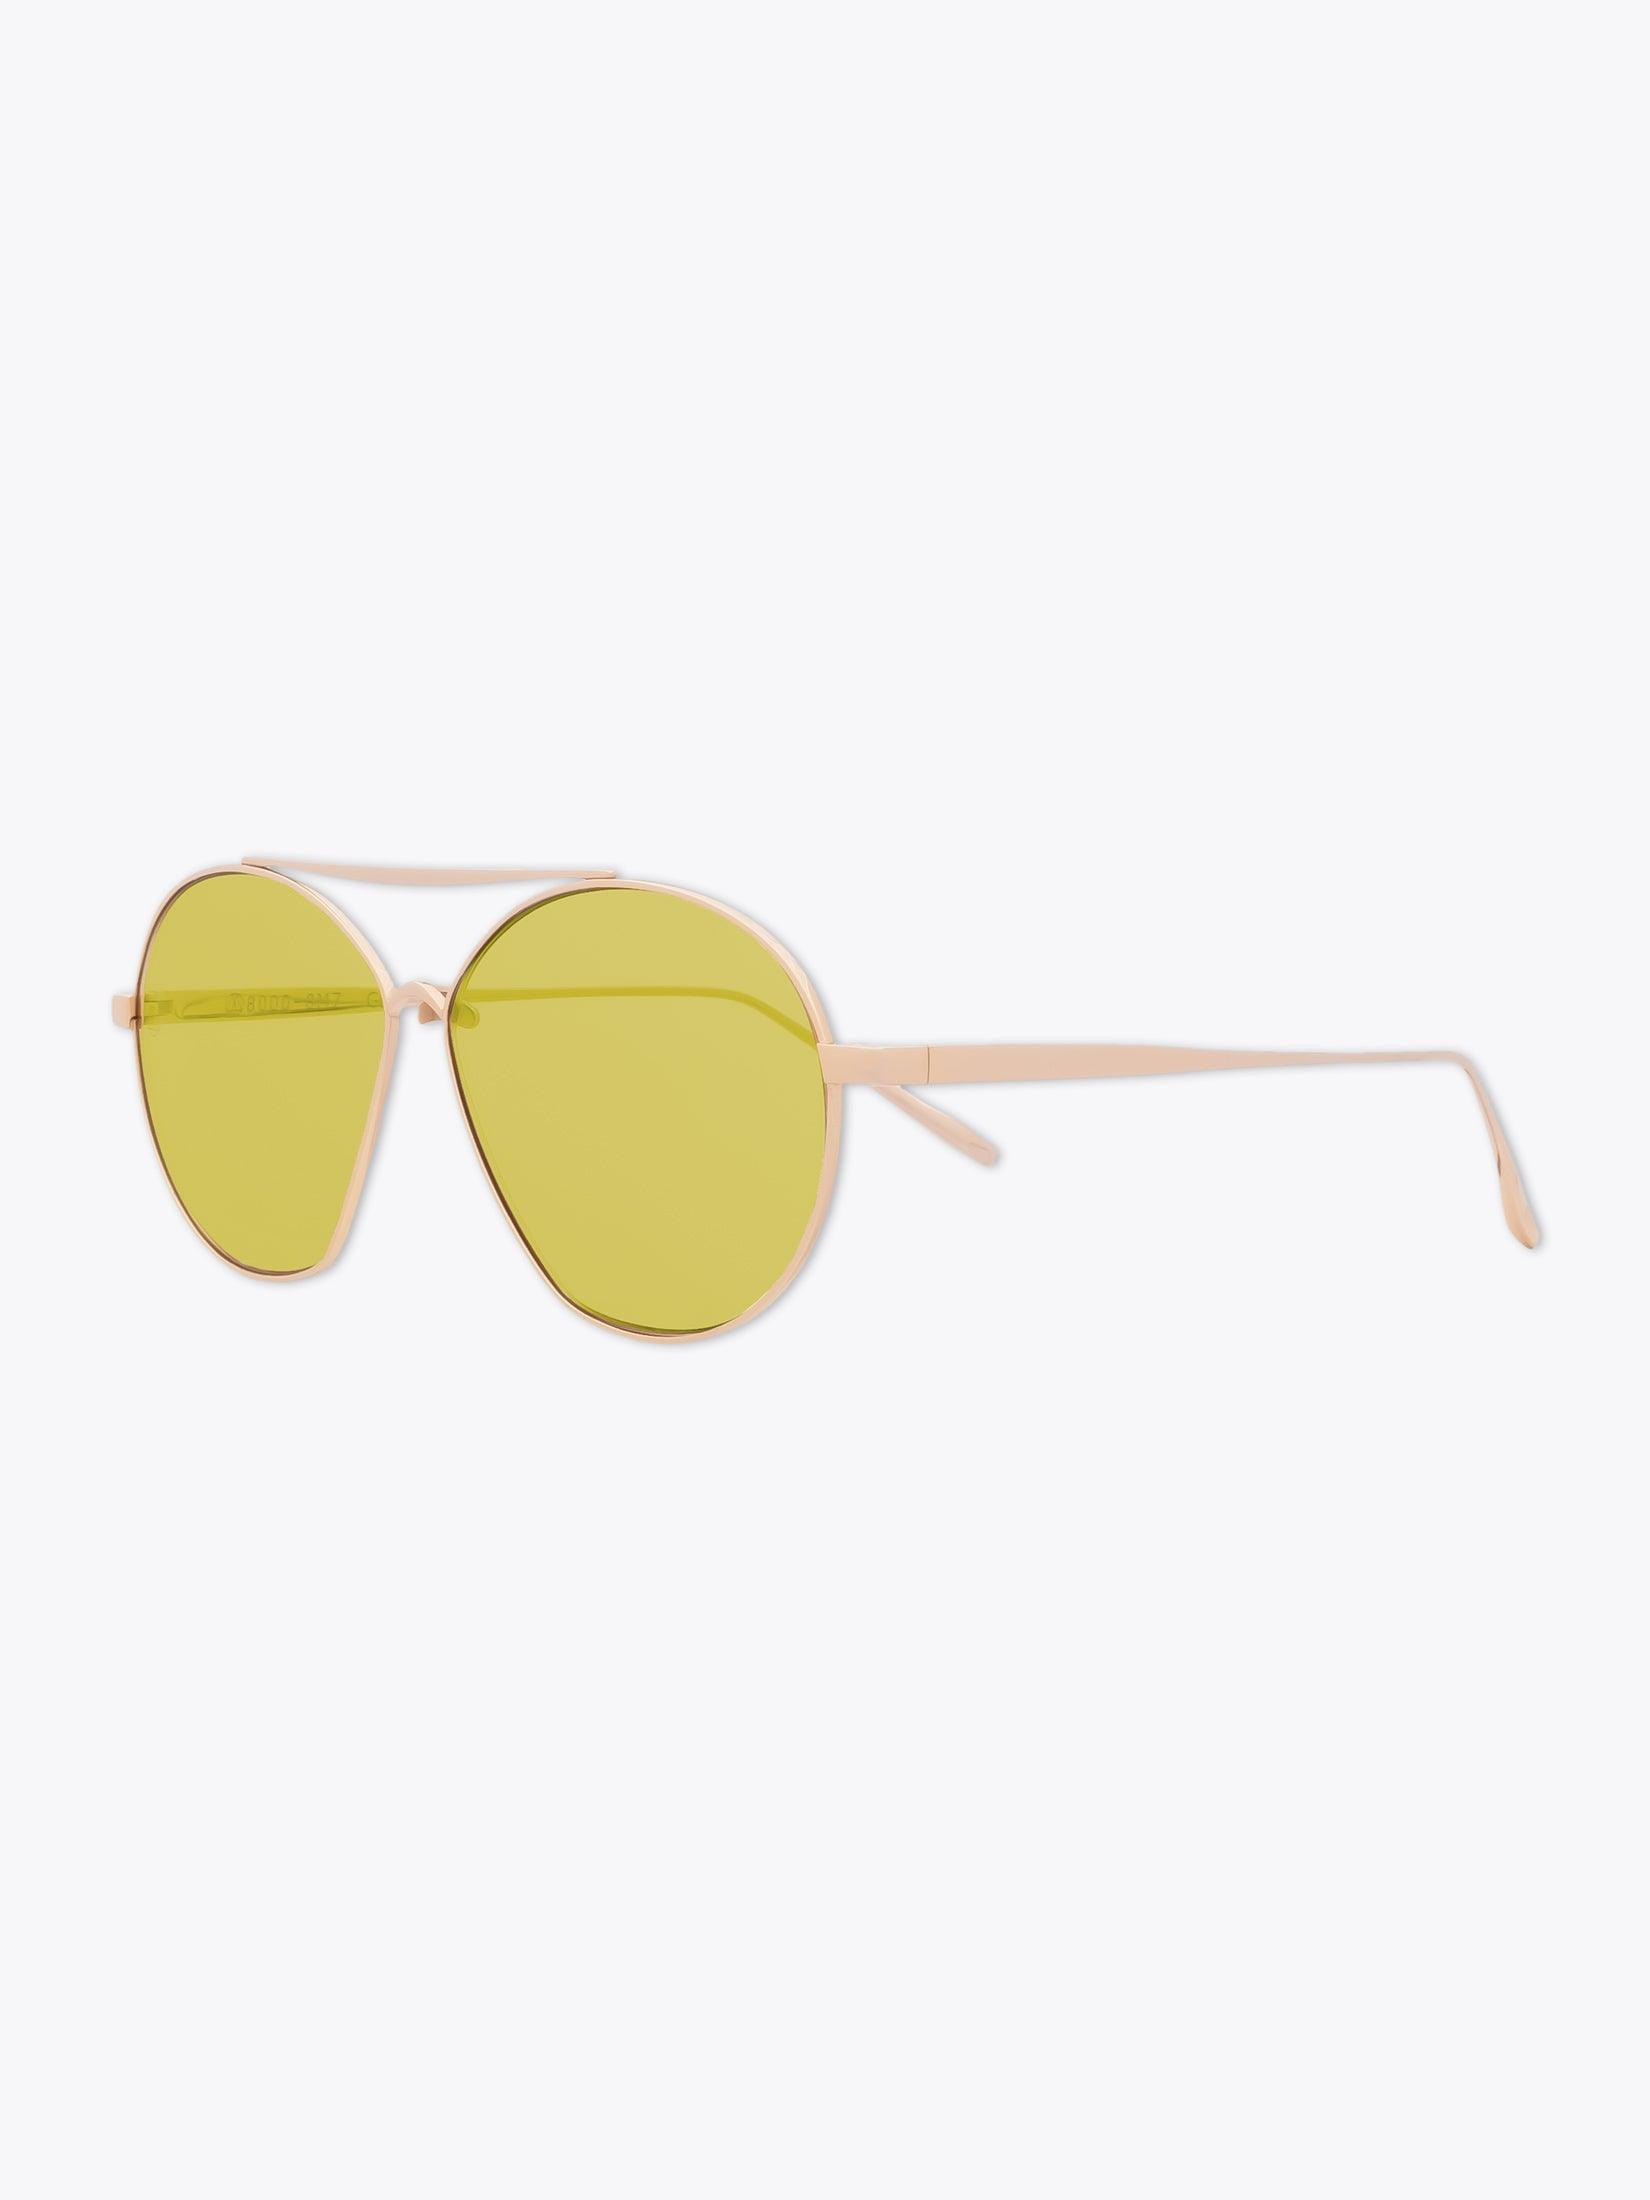 8000 Eyewear 8M7 Gold-Tone Pilot Sunglasses